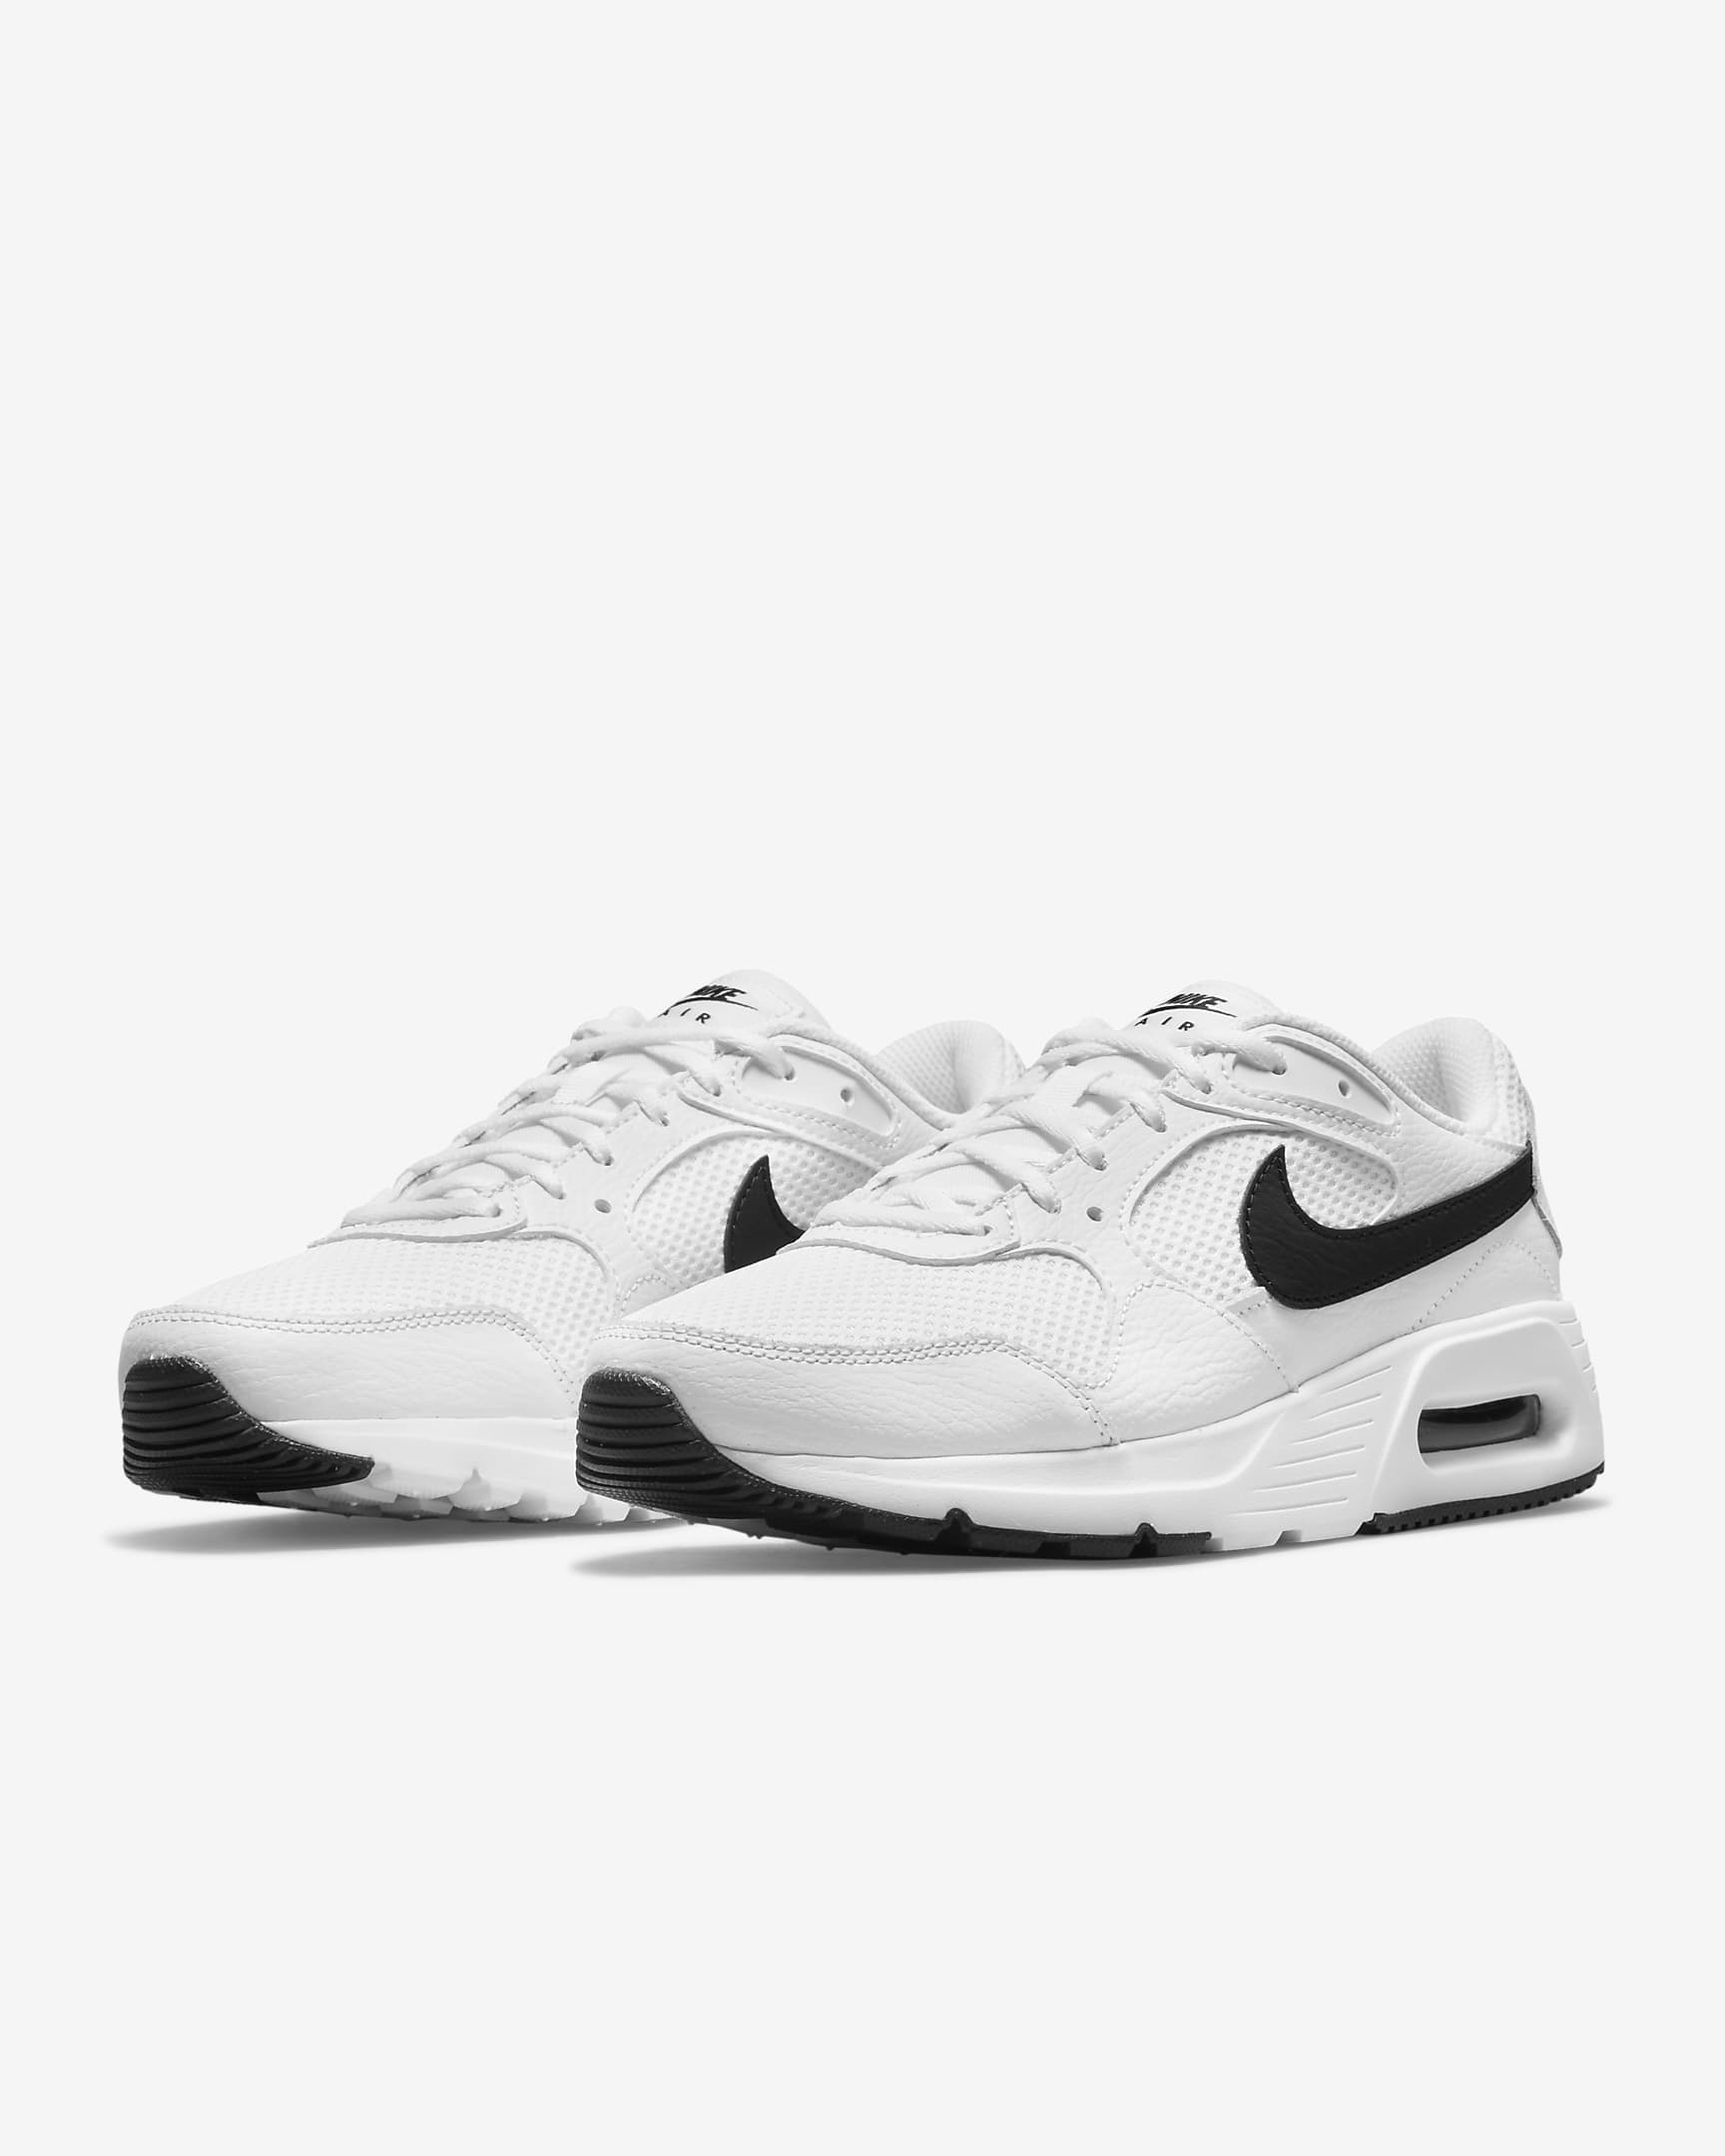 Nike Air Max SC Women's Shoes - White/White/Black